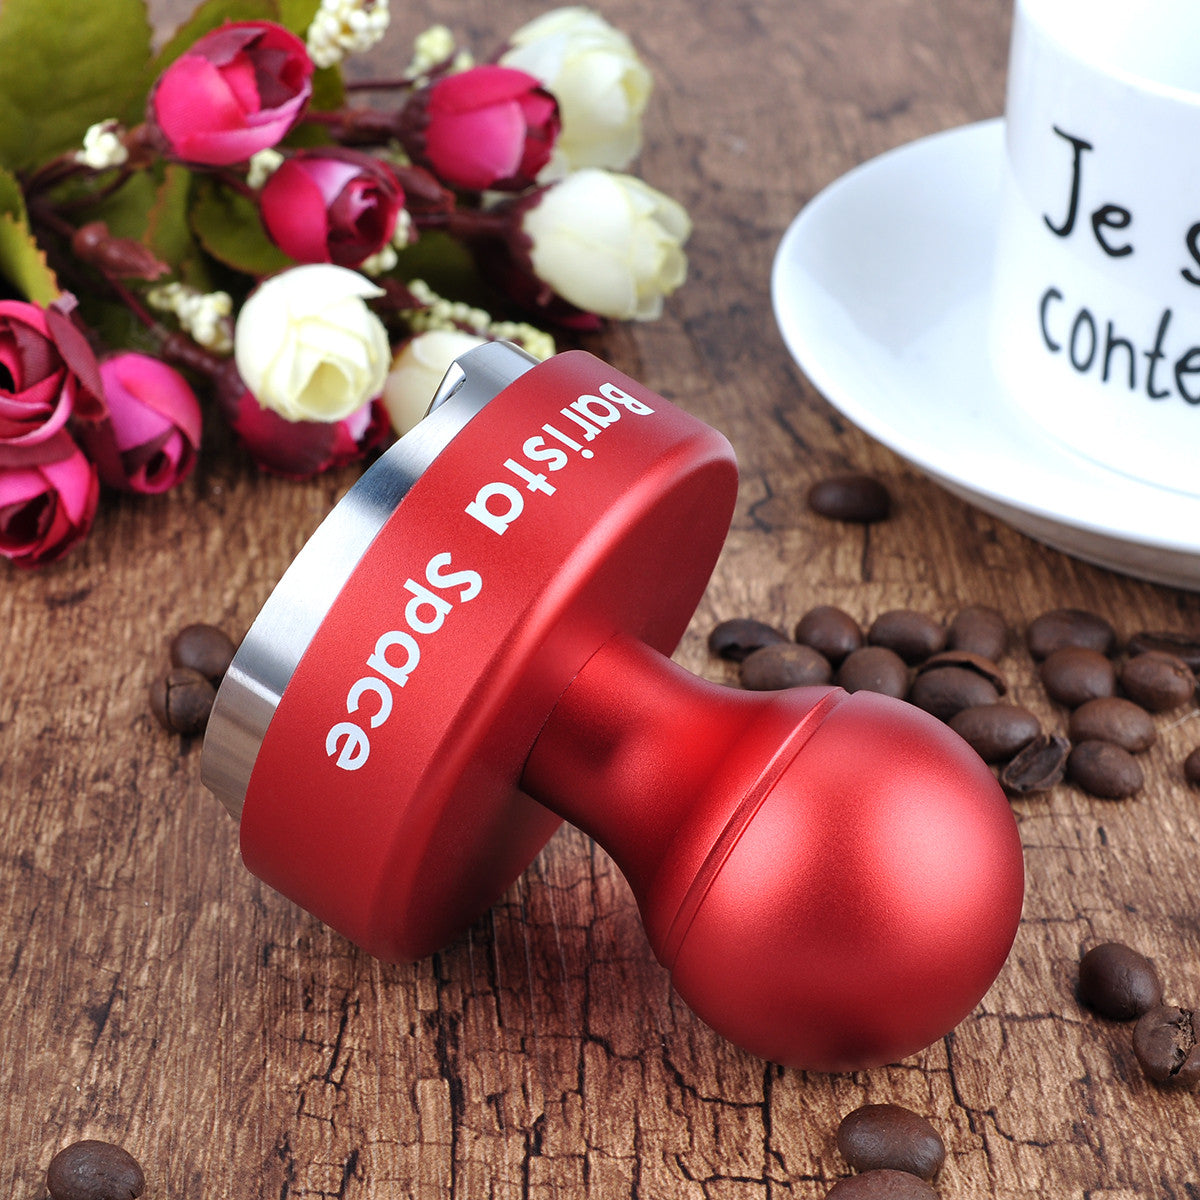 58mm coffee tamper – BaristaSpace Espresso Coffee Tool including milk jug, tamper and distributor for sale.